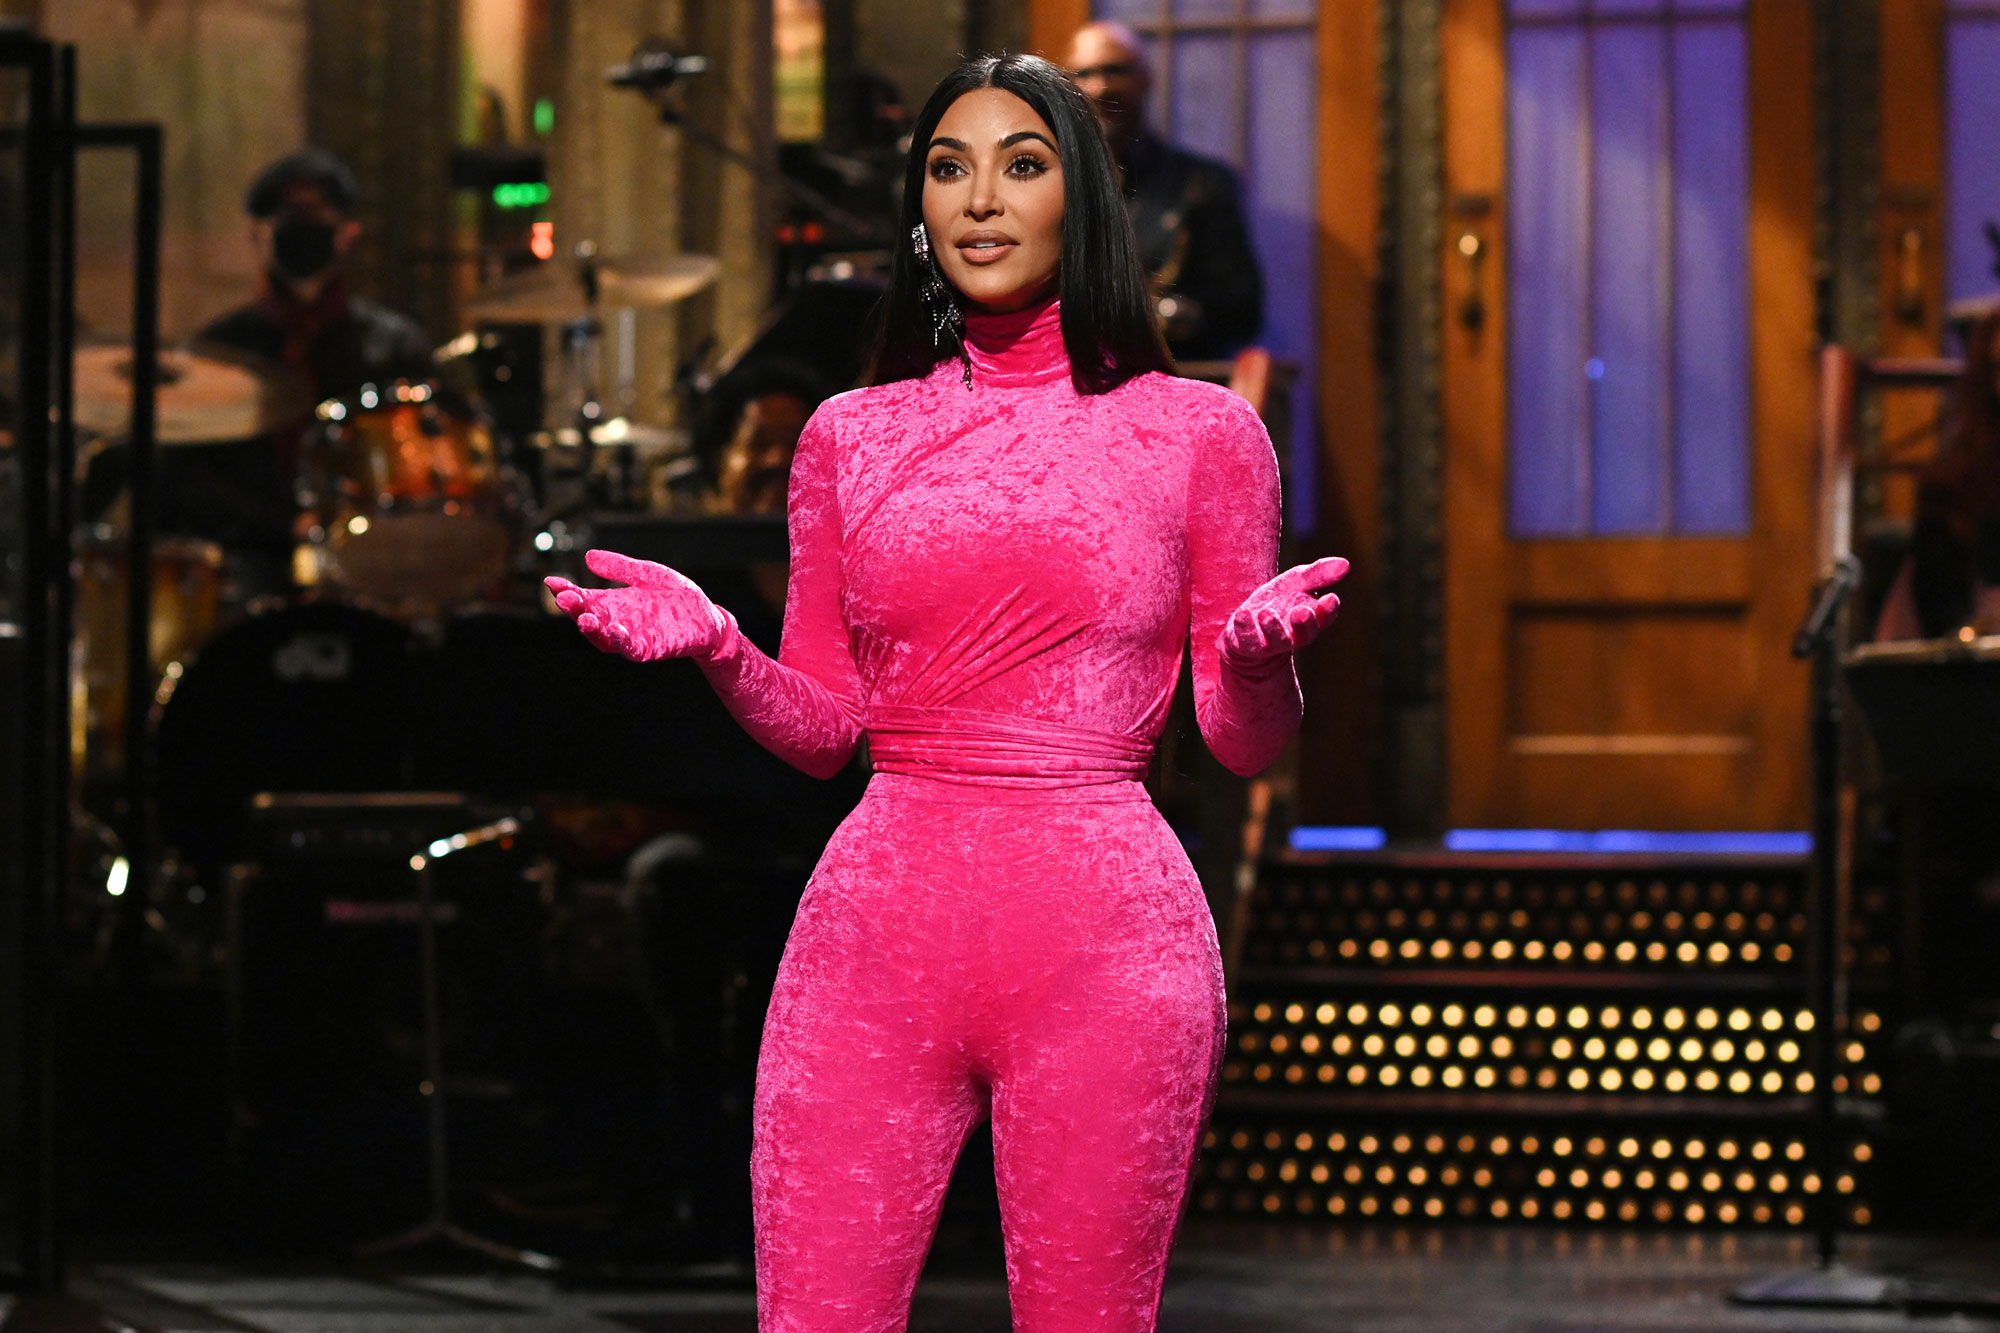 https://www.usmagazine.com/wp-content/uploads/2021/10/Kim-Kardashian-Hot-Pink-Outfits-Saturday-Night-Live-2.jpg?quality=82&strip=all